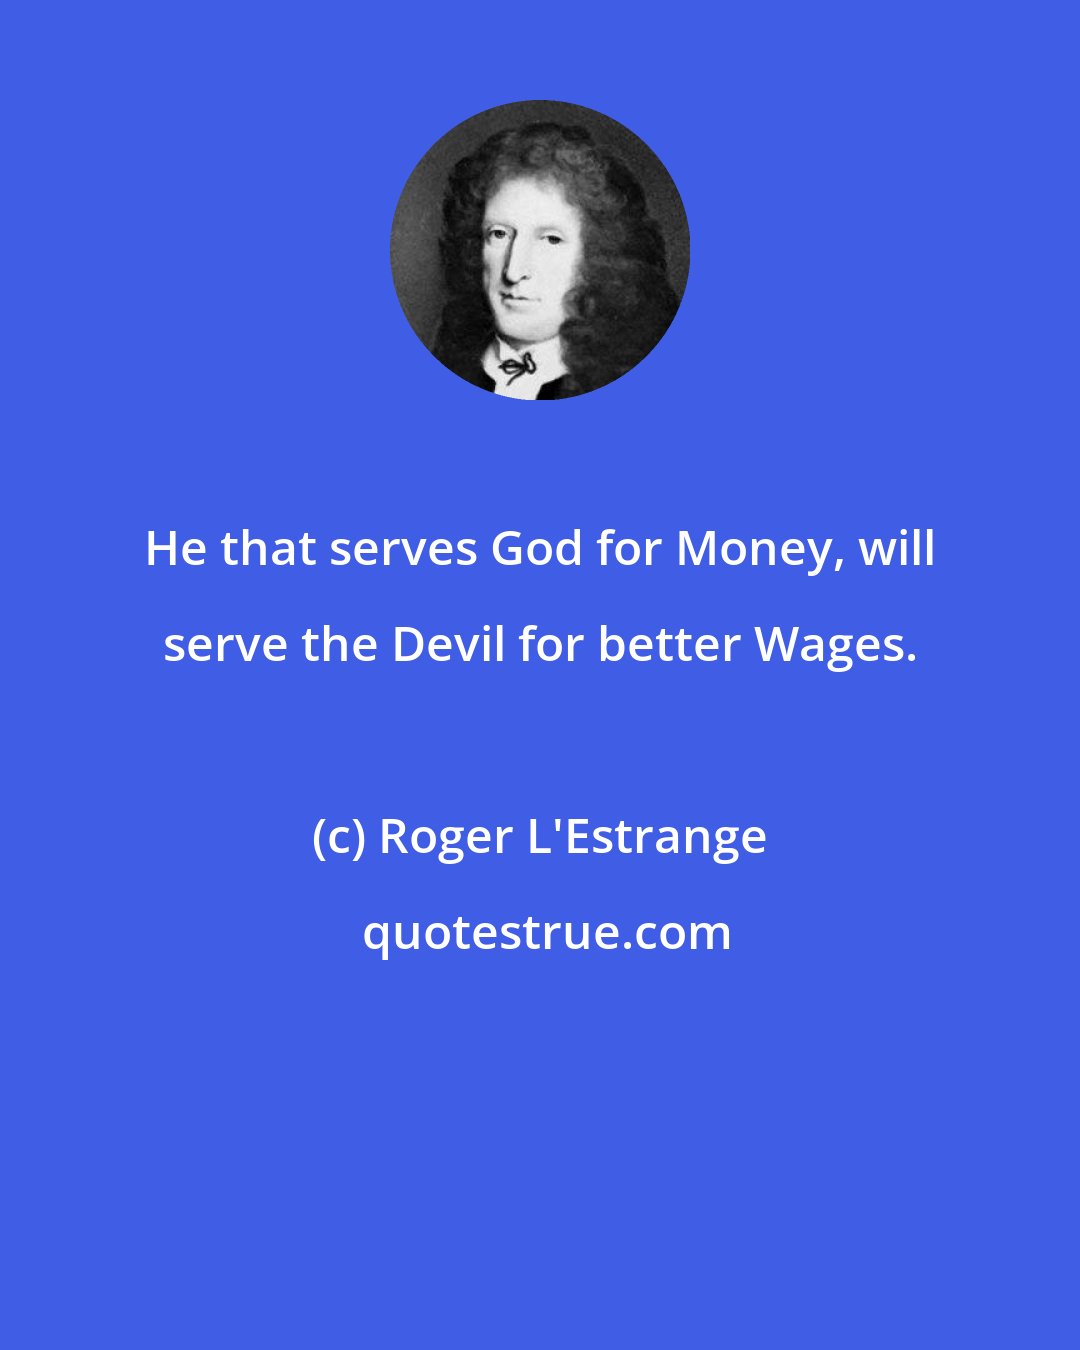 Roger L'Estrange: He that serves God for Money, will serve the Devil for better Wages.